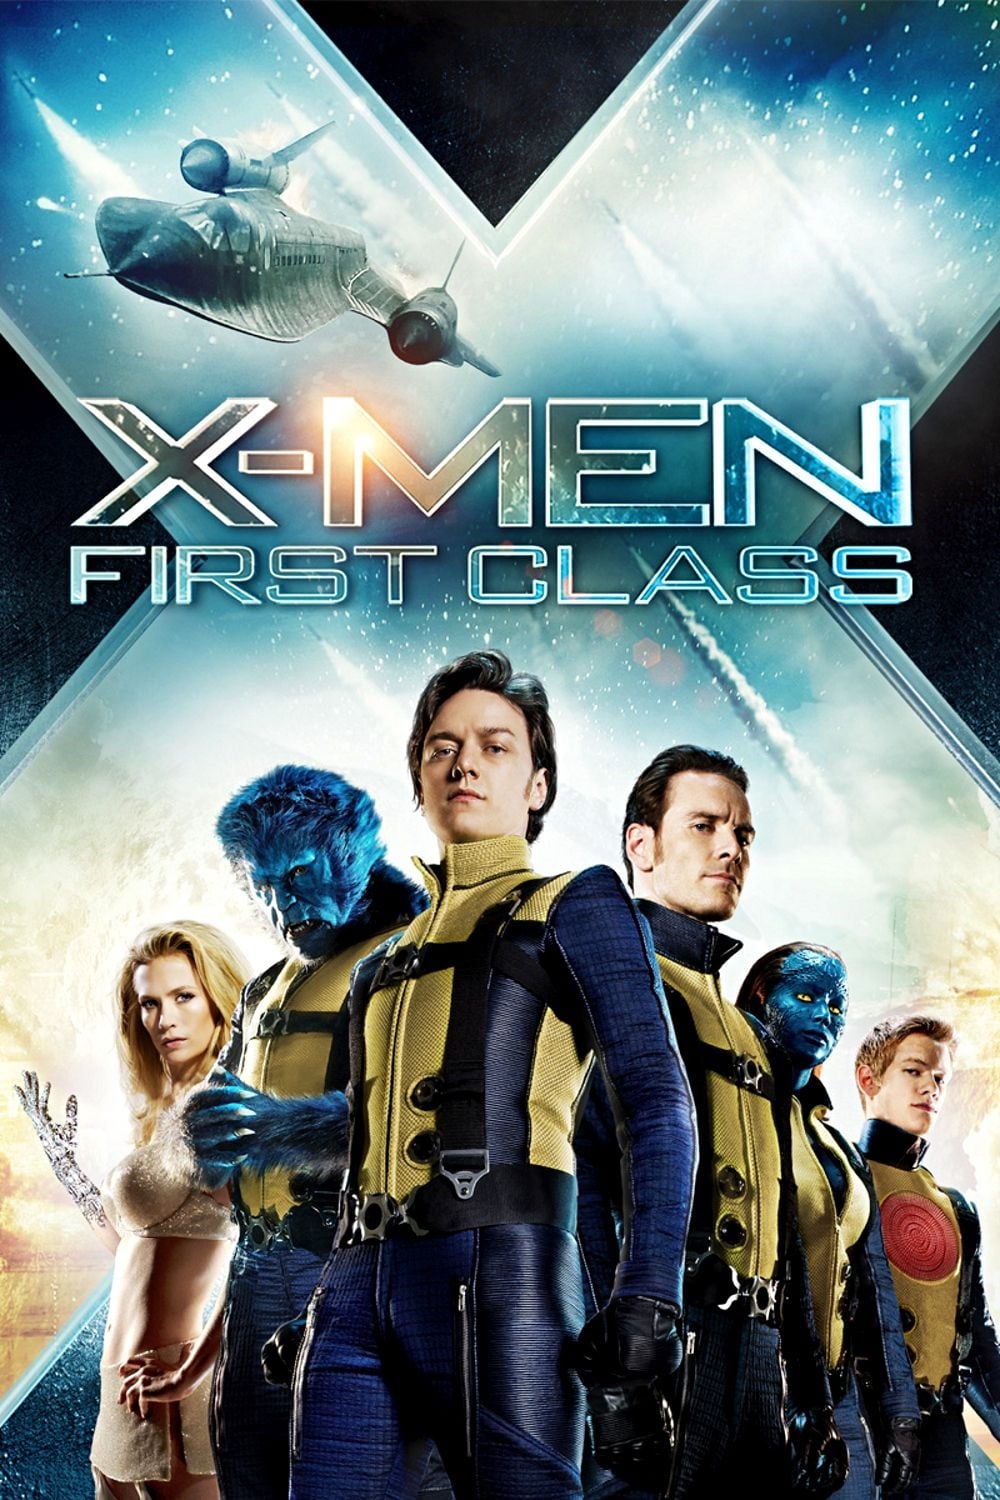 X-Men: Primera generación (2011) Full HD 1080p Latino